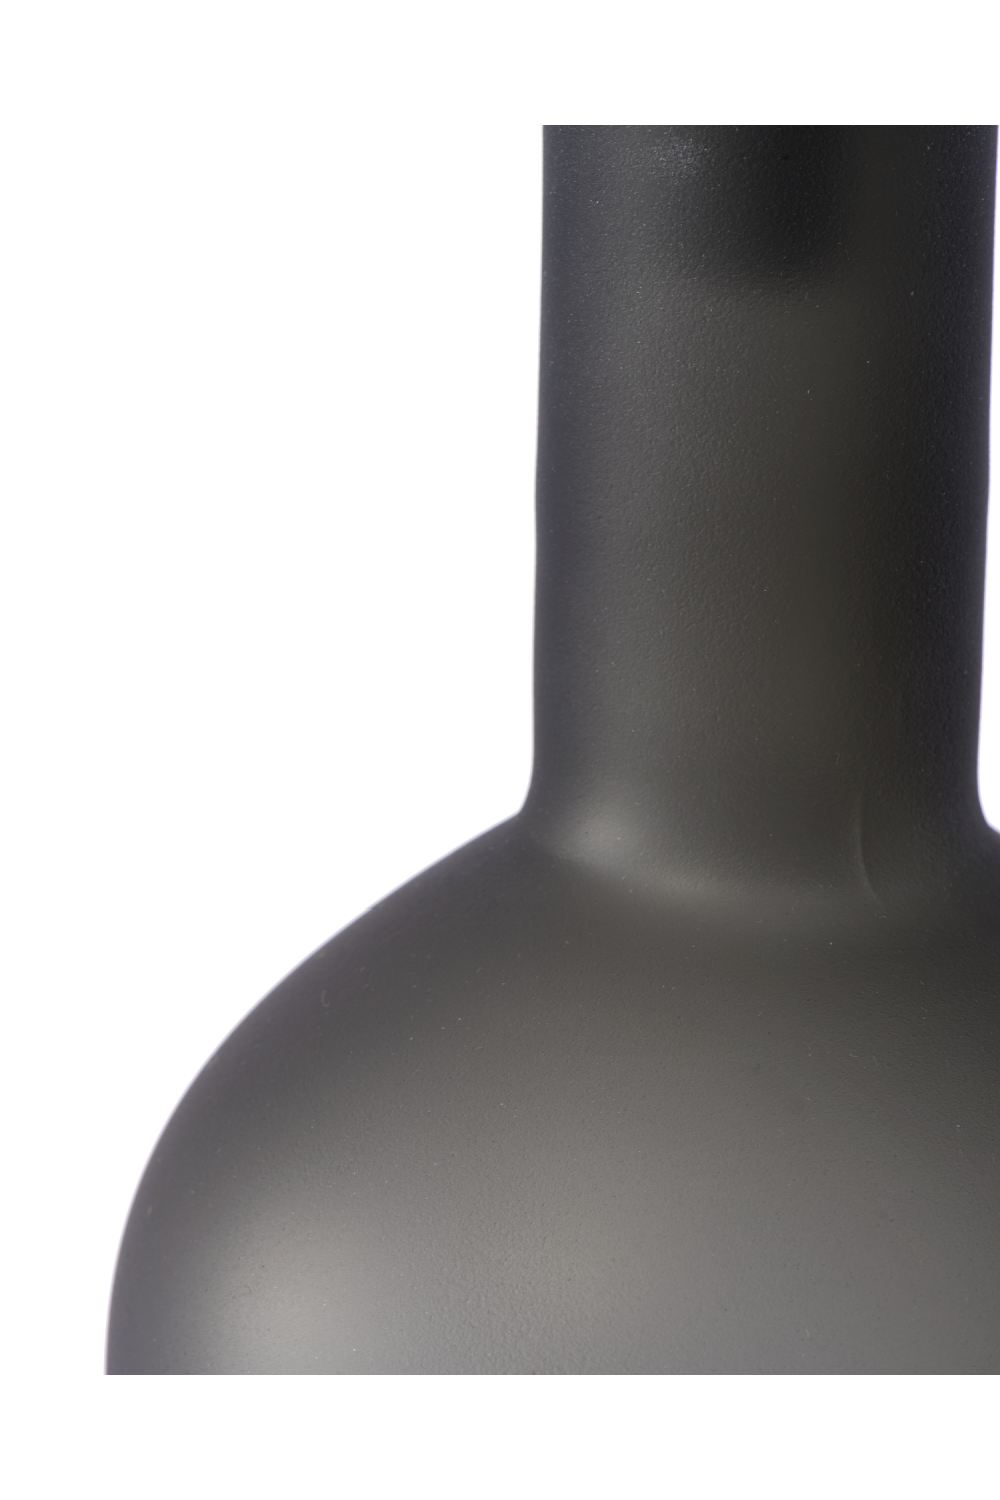 Matte Black Glass Decor | Pols Potten Bubbles and Bottles | Oroa.com